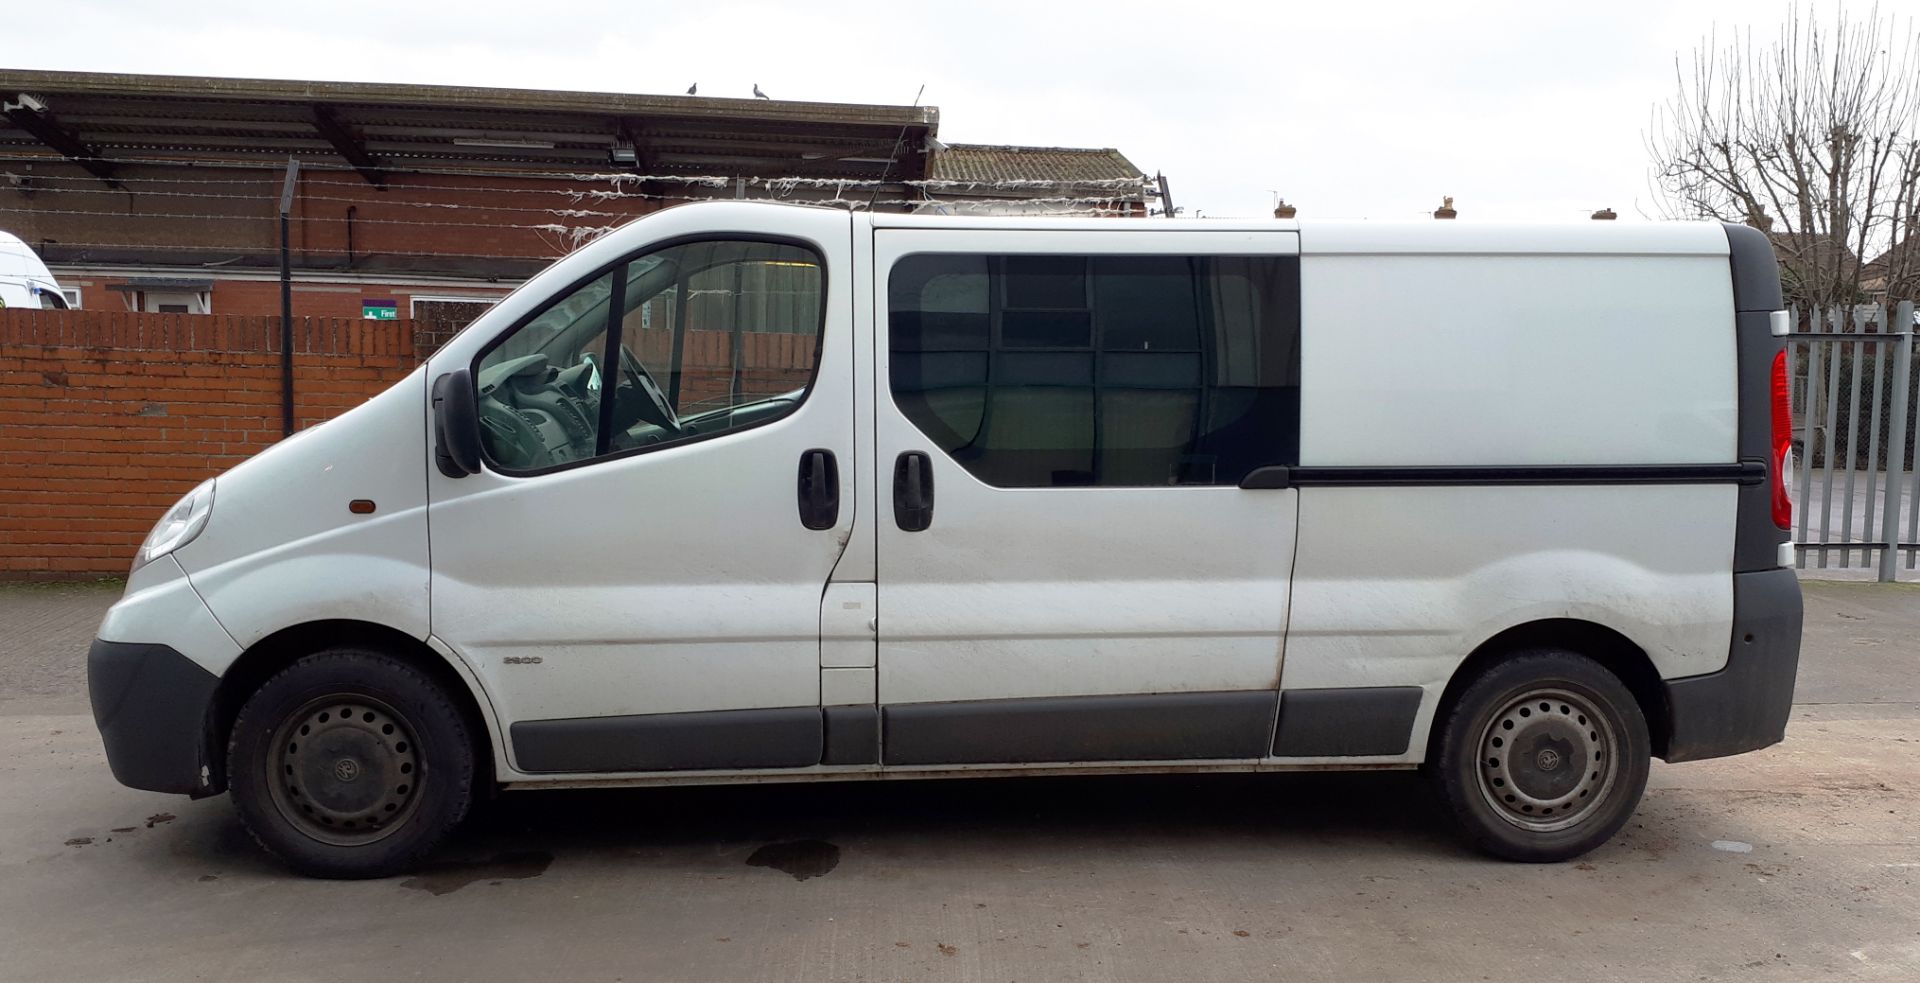 Vauxhall Vivaro 2900 CDTI LWB Panel Van, registration MC08 RSC, first registered 17 April 2014, V5 - Image 2 of 12